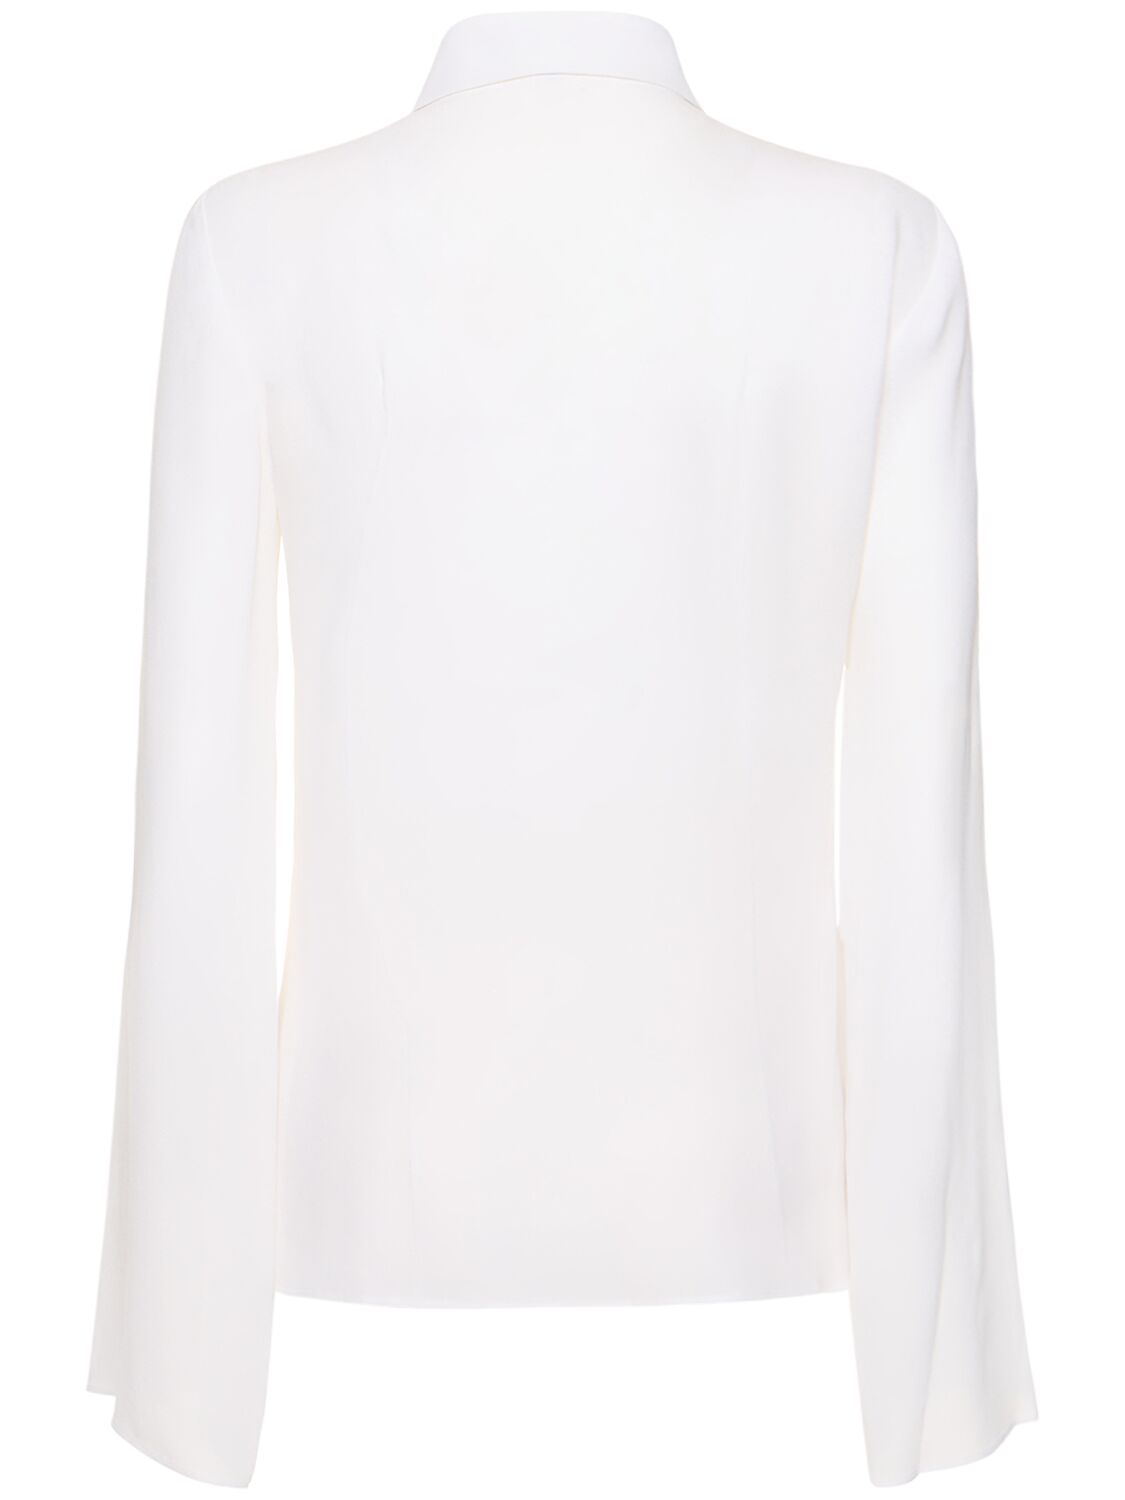 Shop Michael Kors Silk Georgette Shirt In White